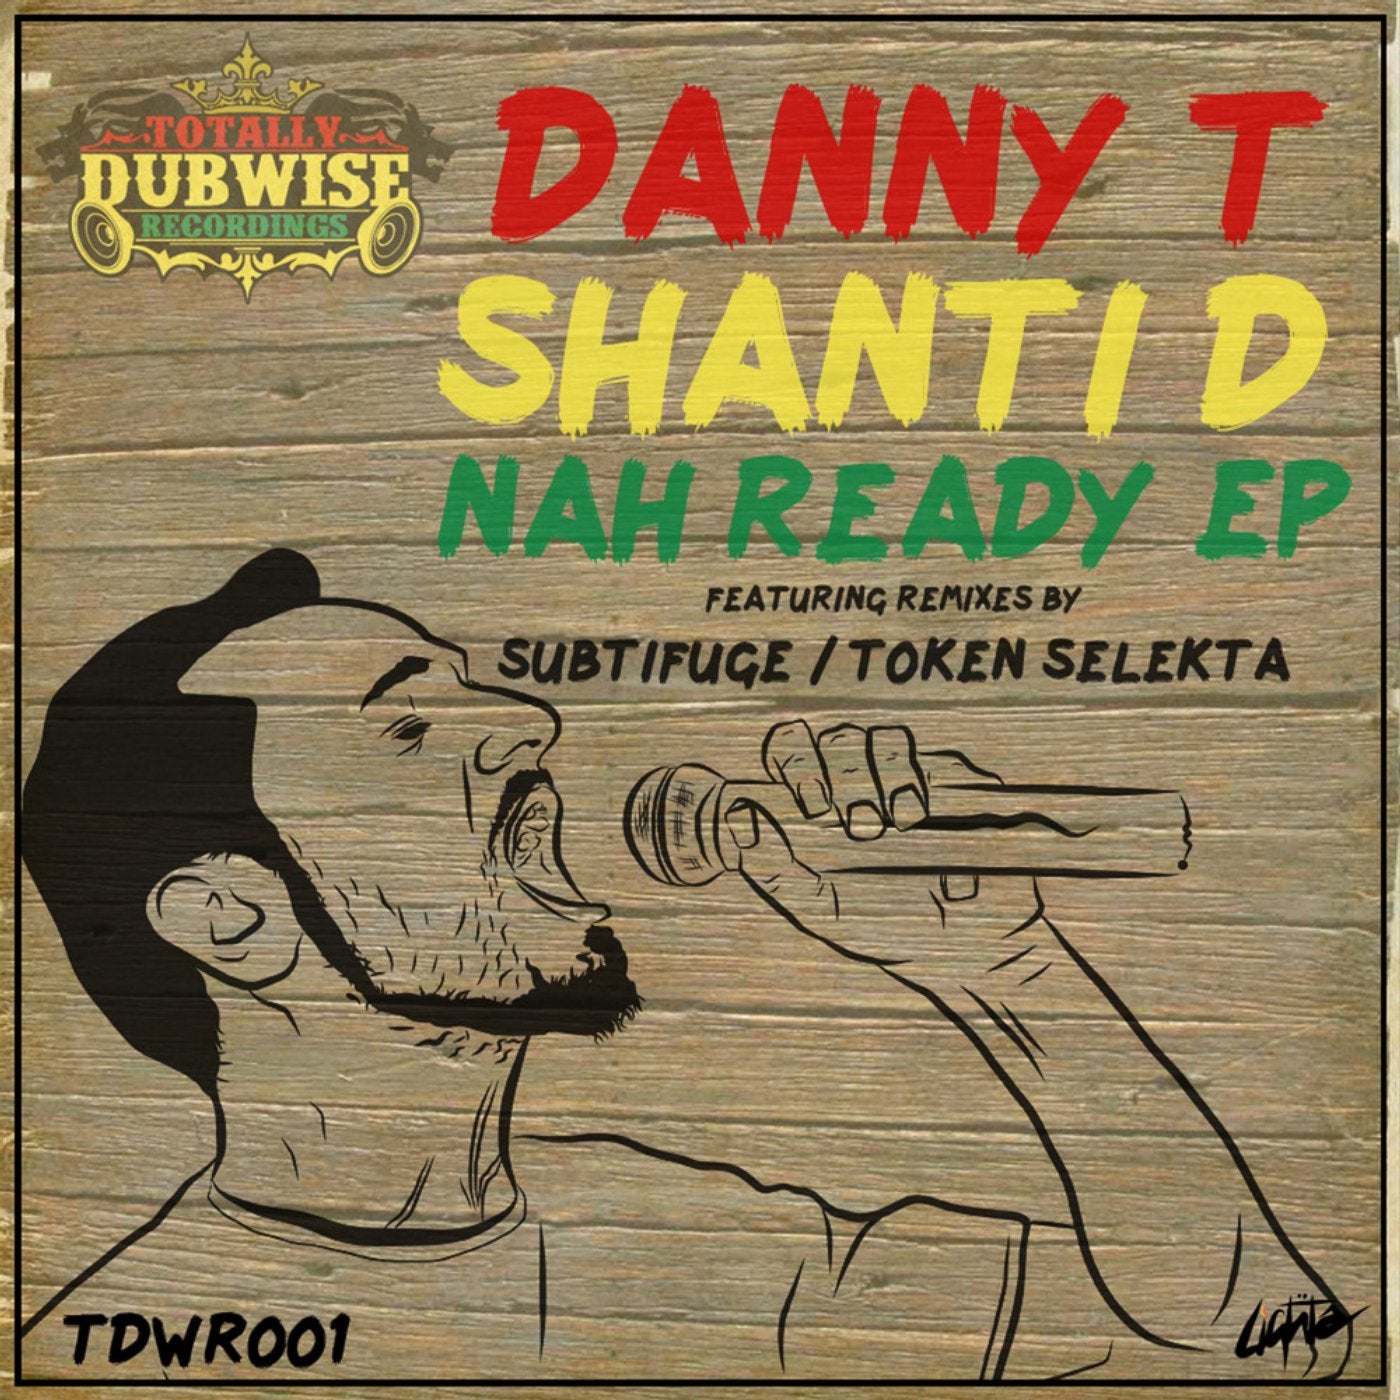 Nah Ready EP (feat. Shanti D)